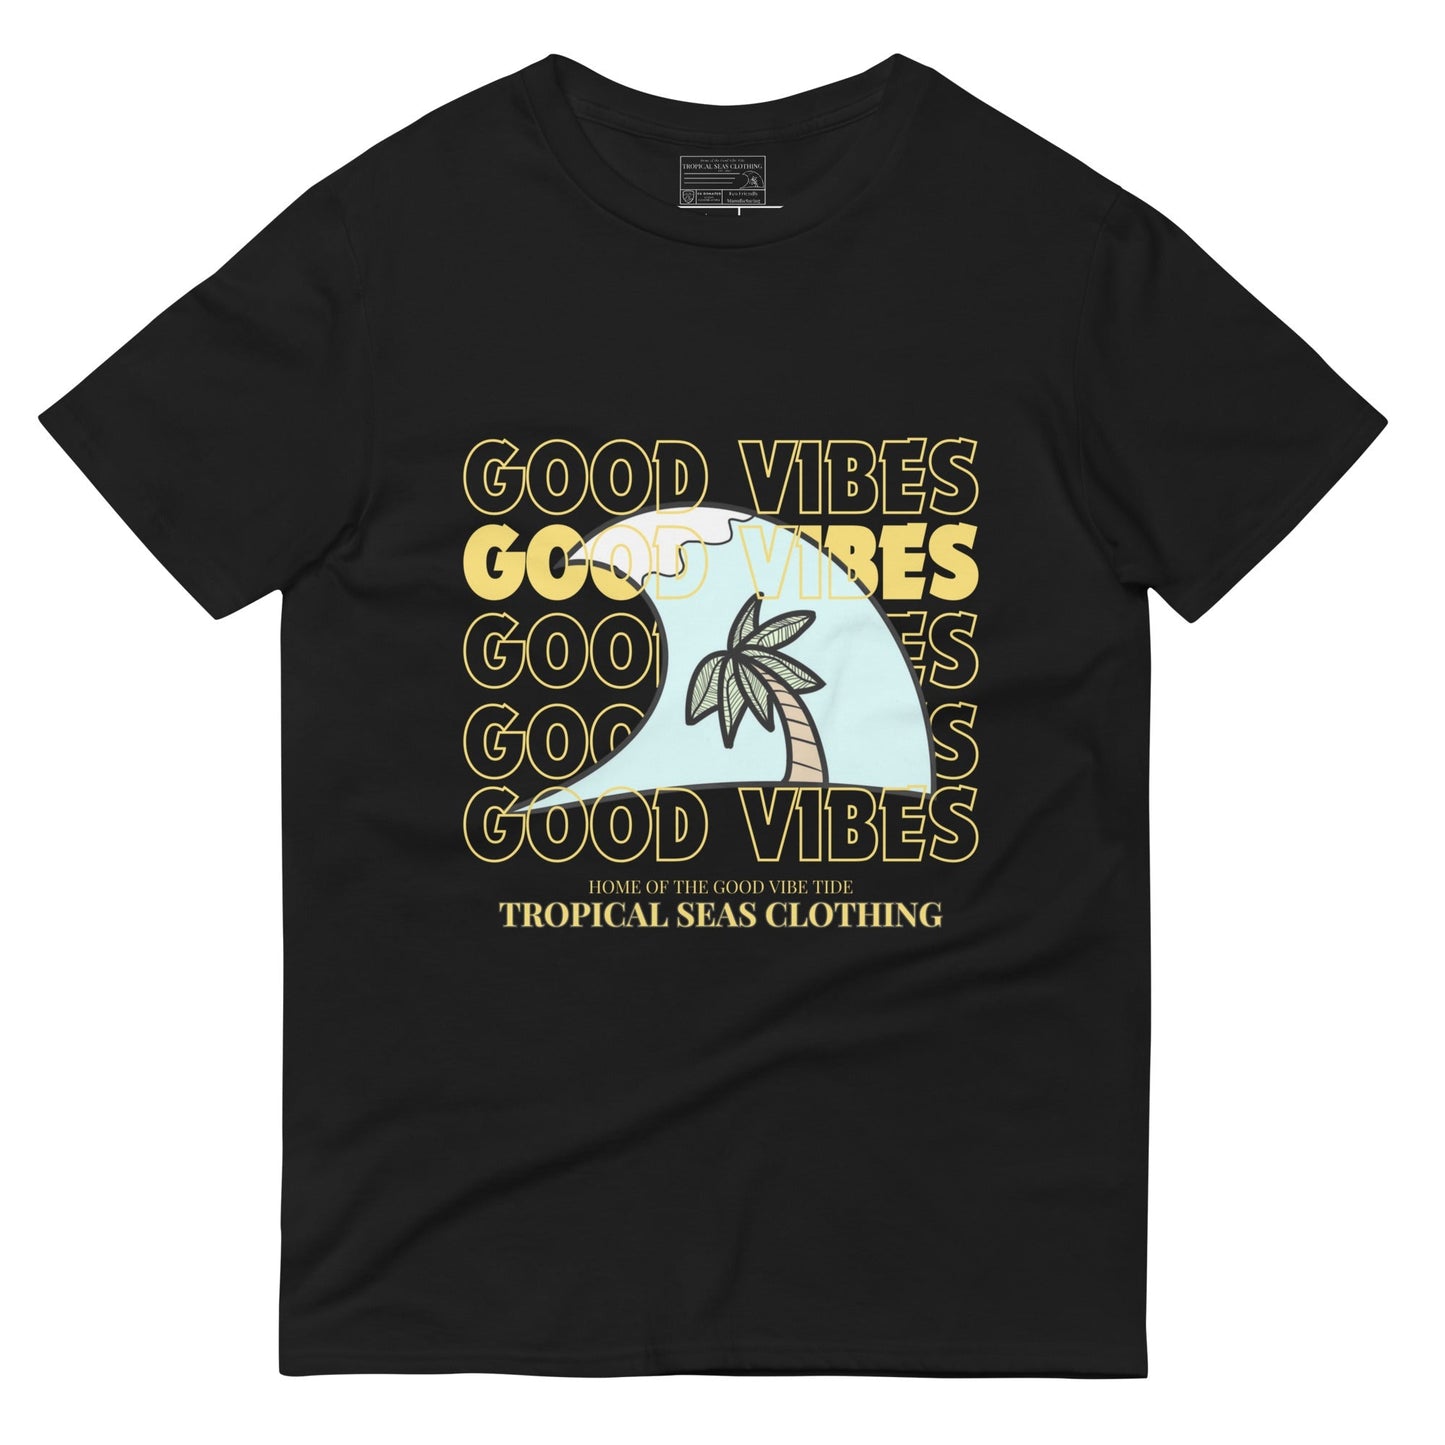 Tropical Seas "Good Vibes" Short-Sleeve T-Shirt - Tropical Seas Clothing 